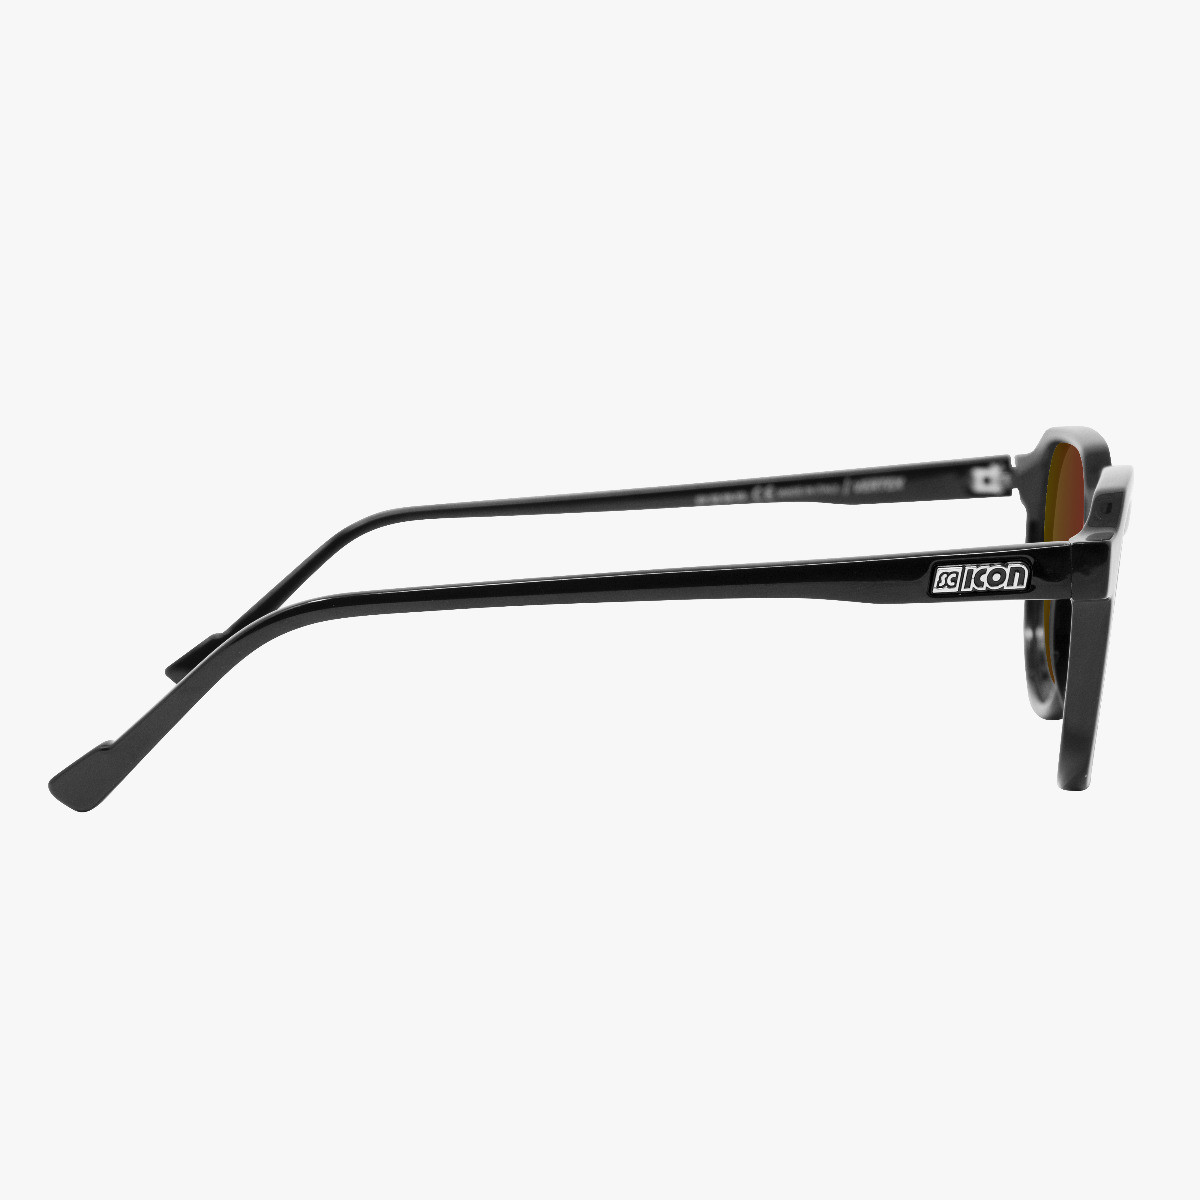 Scicon Sports | Vertex Lifestyle Sunglasses - Black, Multimirror Red Lens - EY220602